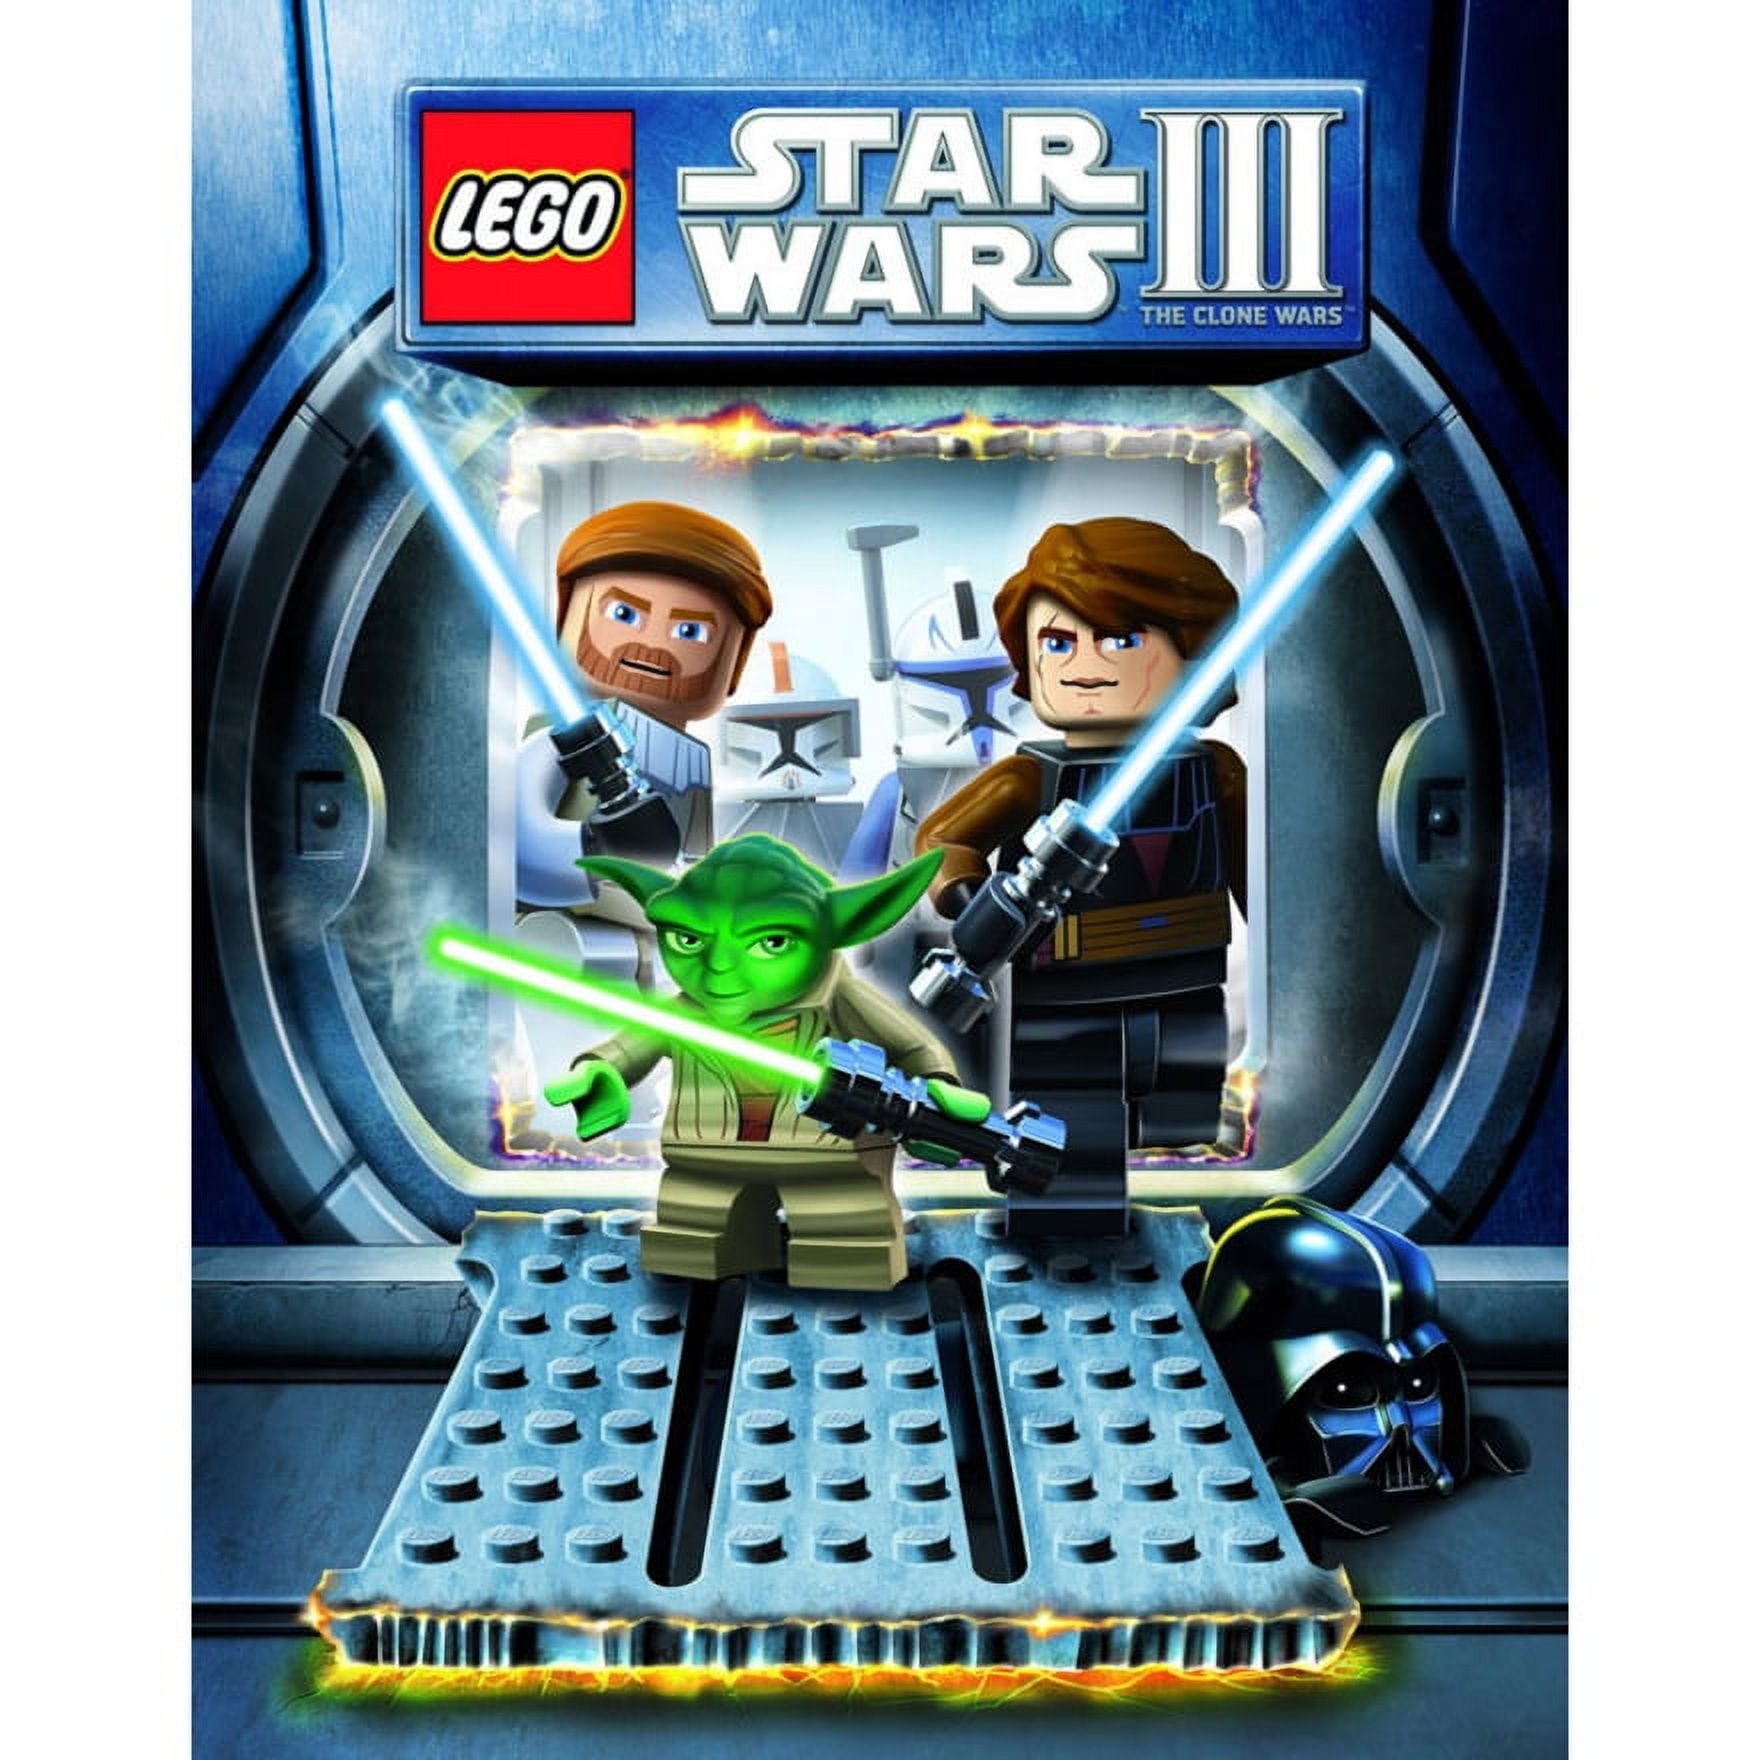  LEGO Star Wars III: The Clone Wars : Disney Interactive Distri:  Video Games